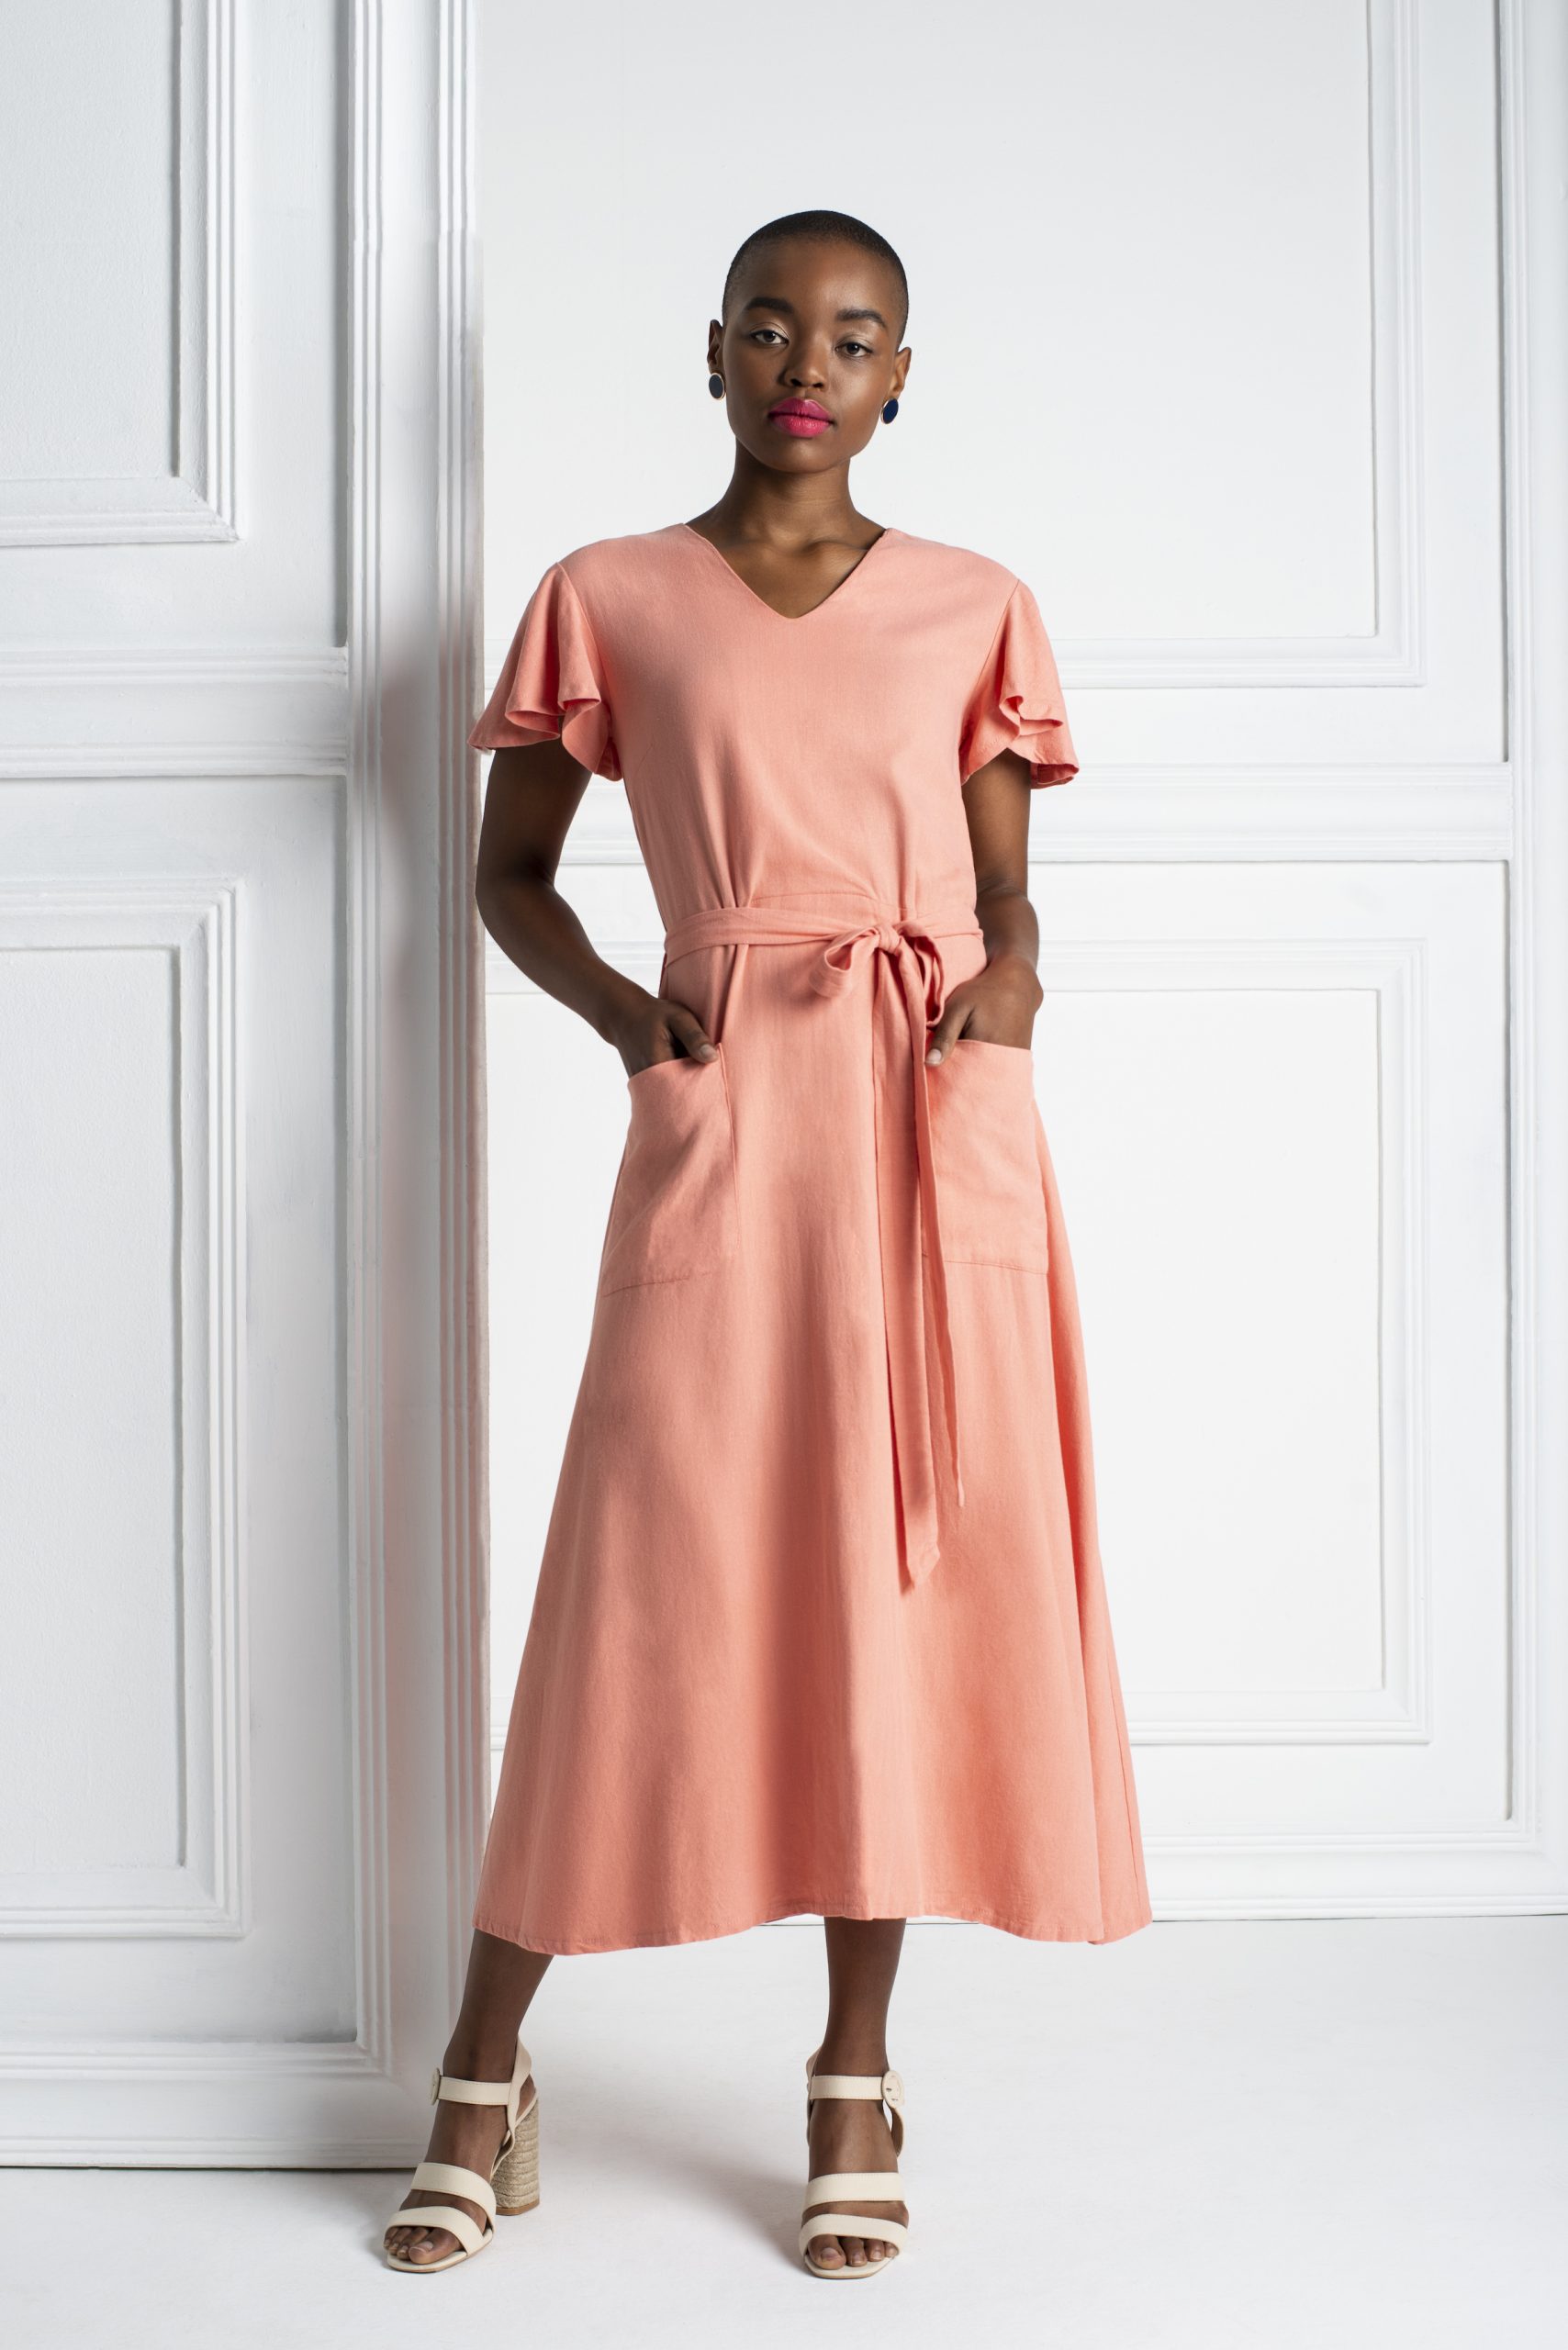 Pattern Sewciety Margot Dress and Top